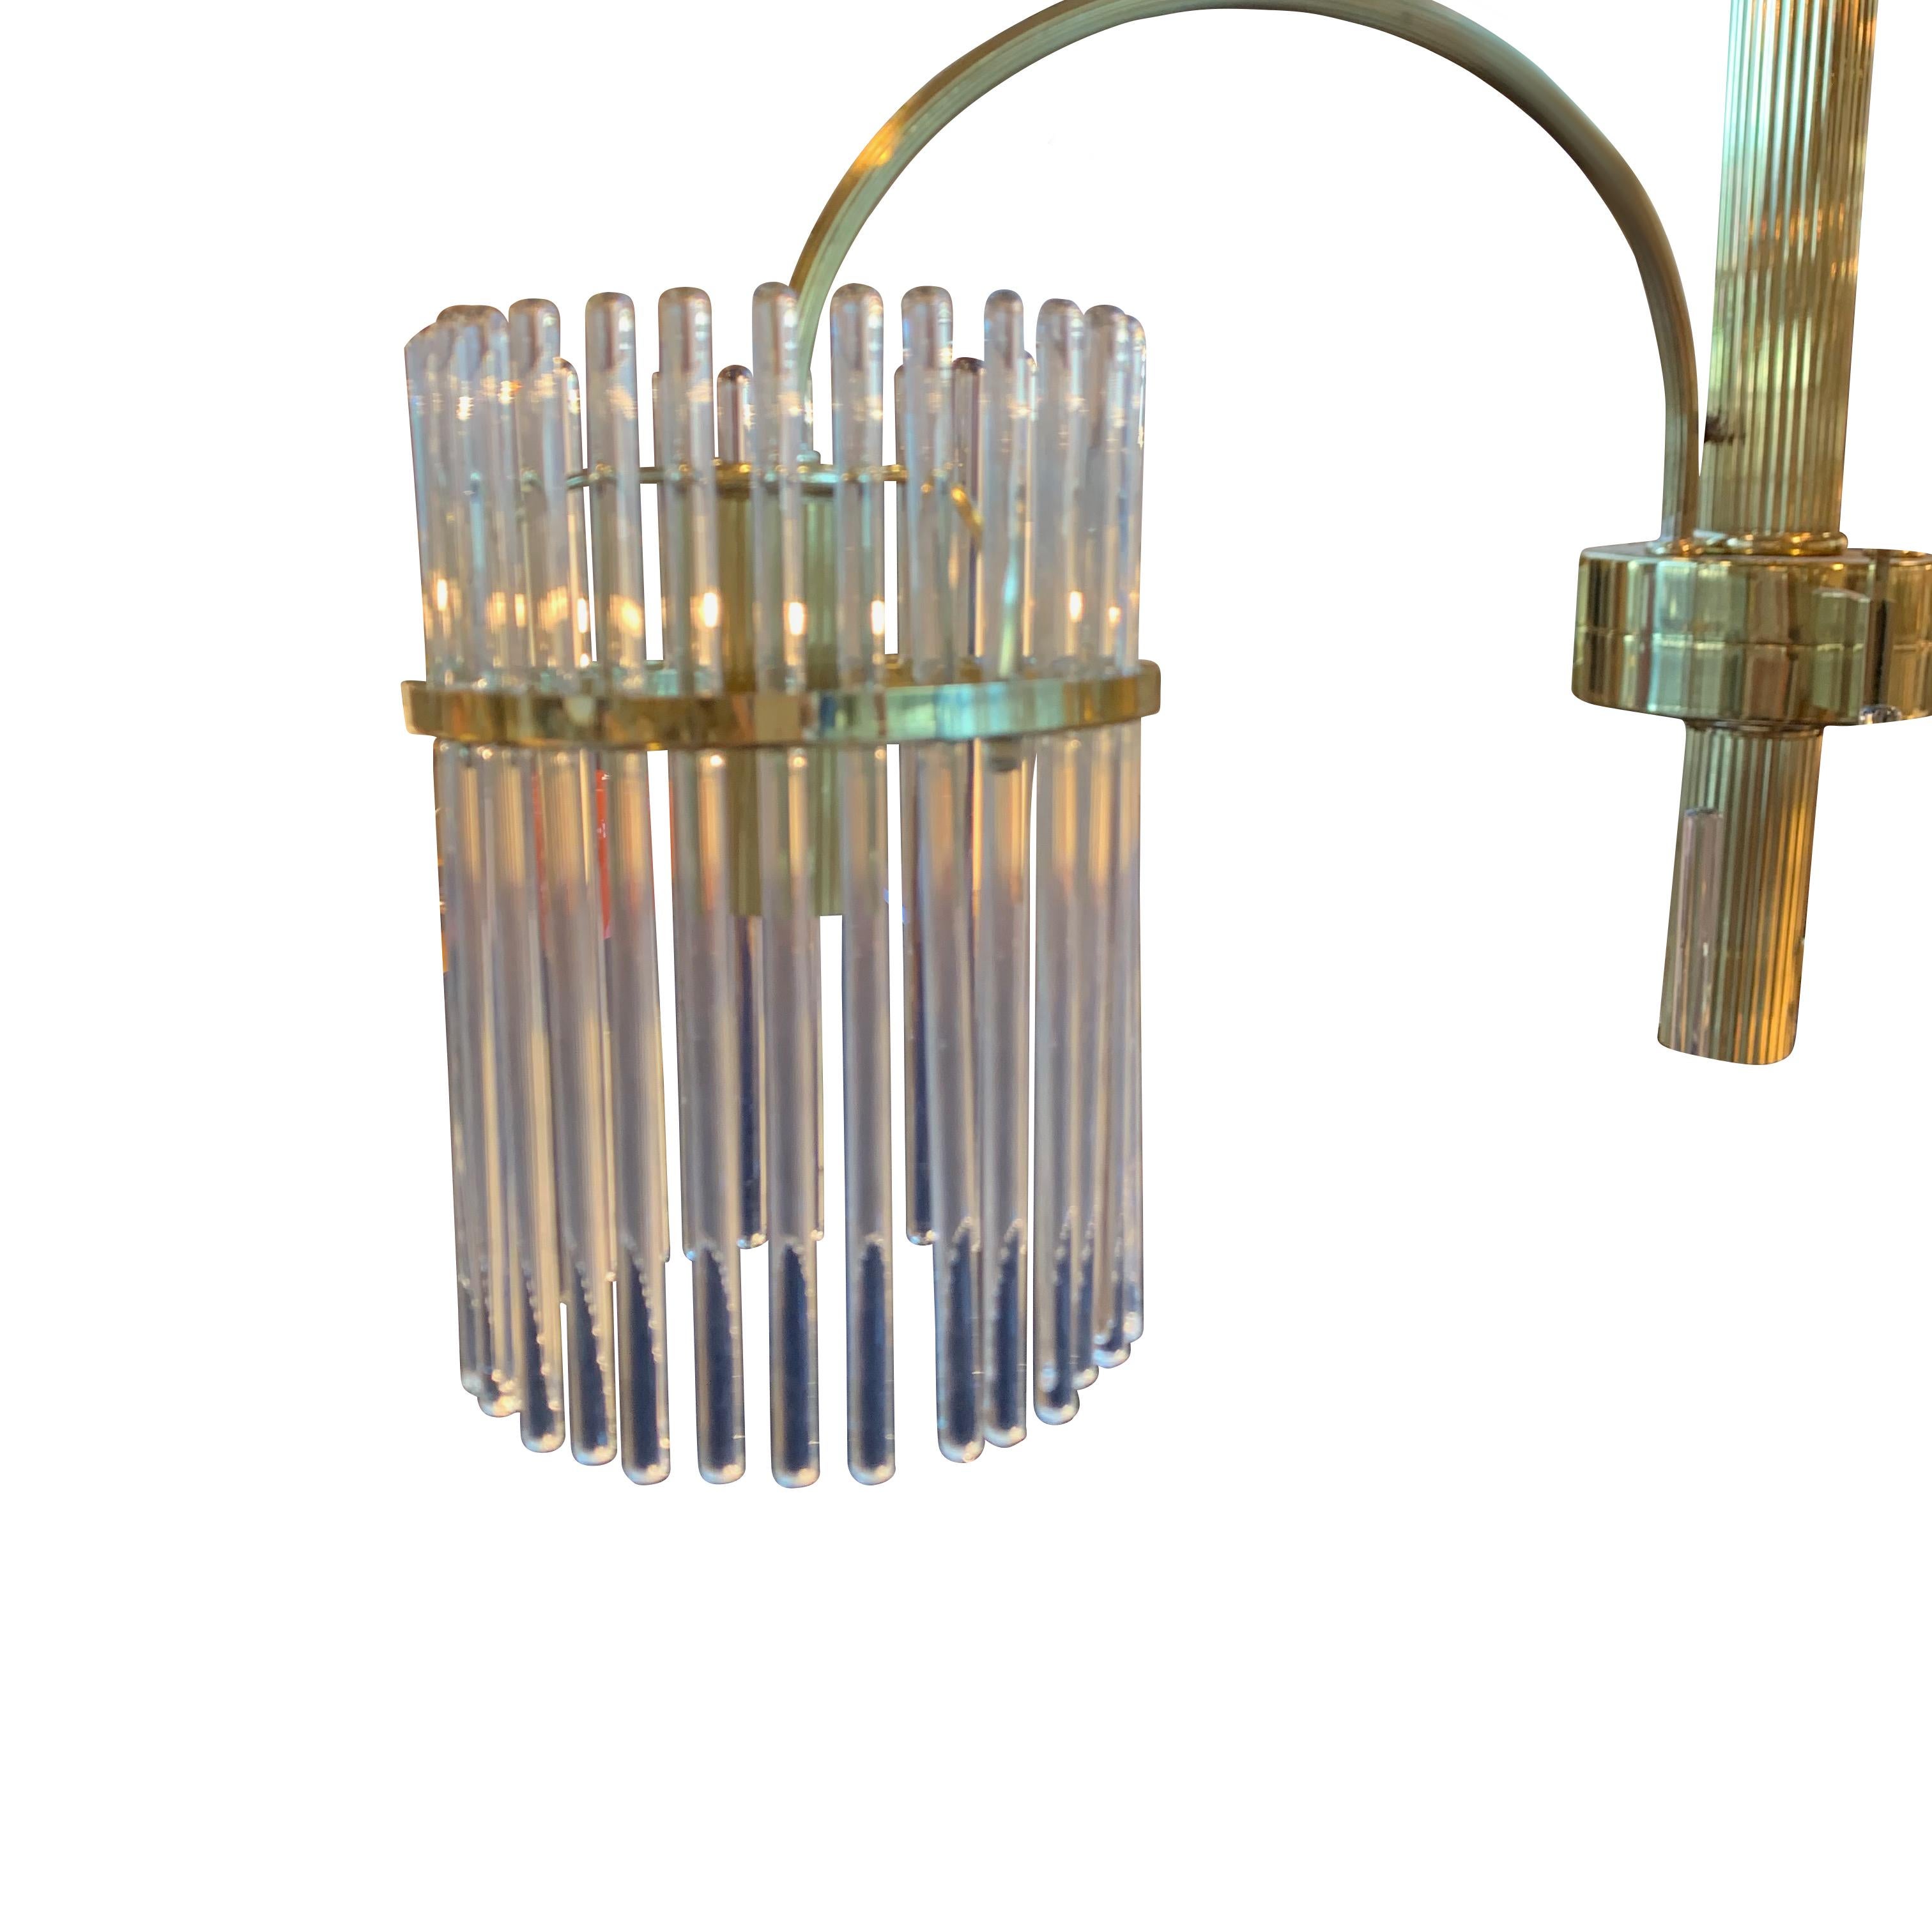 Italian Crystal Rods and Brass Trim Three-Arm Chandelier, Sciolari Design, Italy, 1970s For Sale